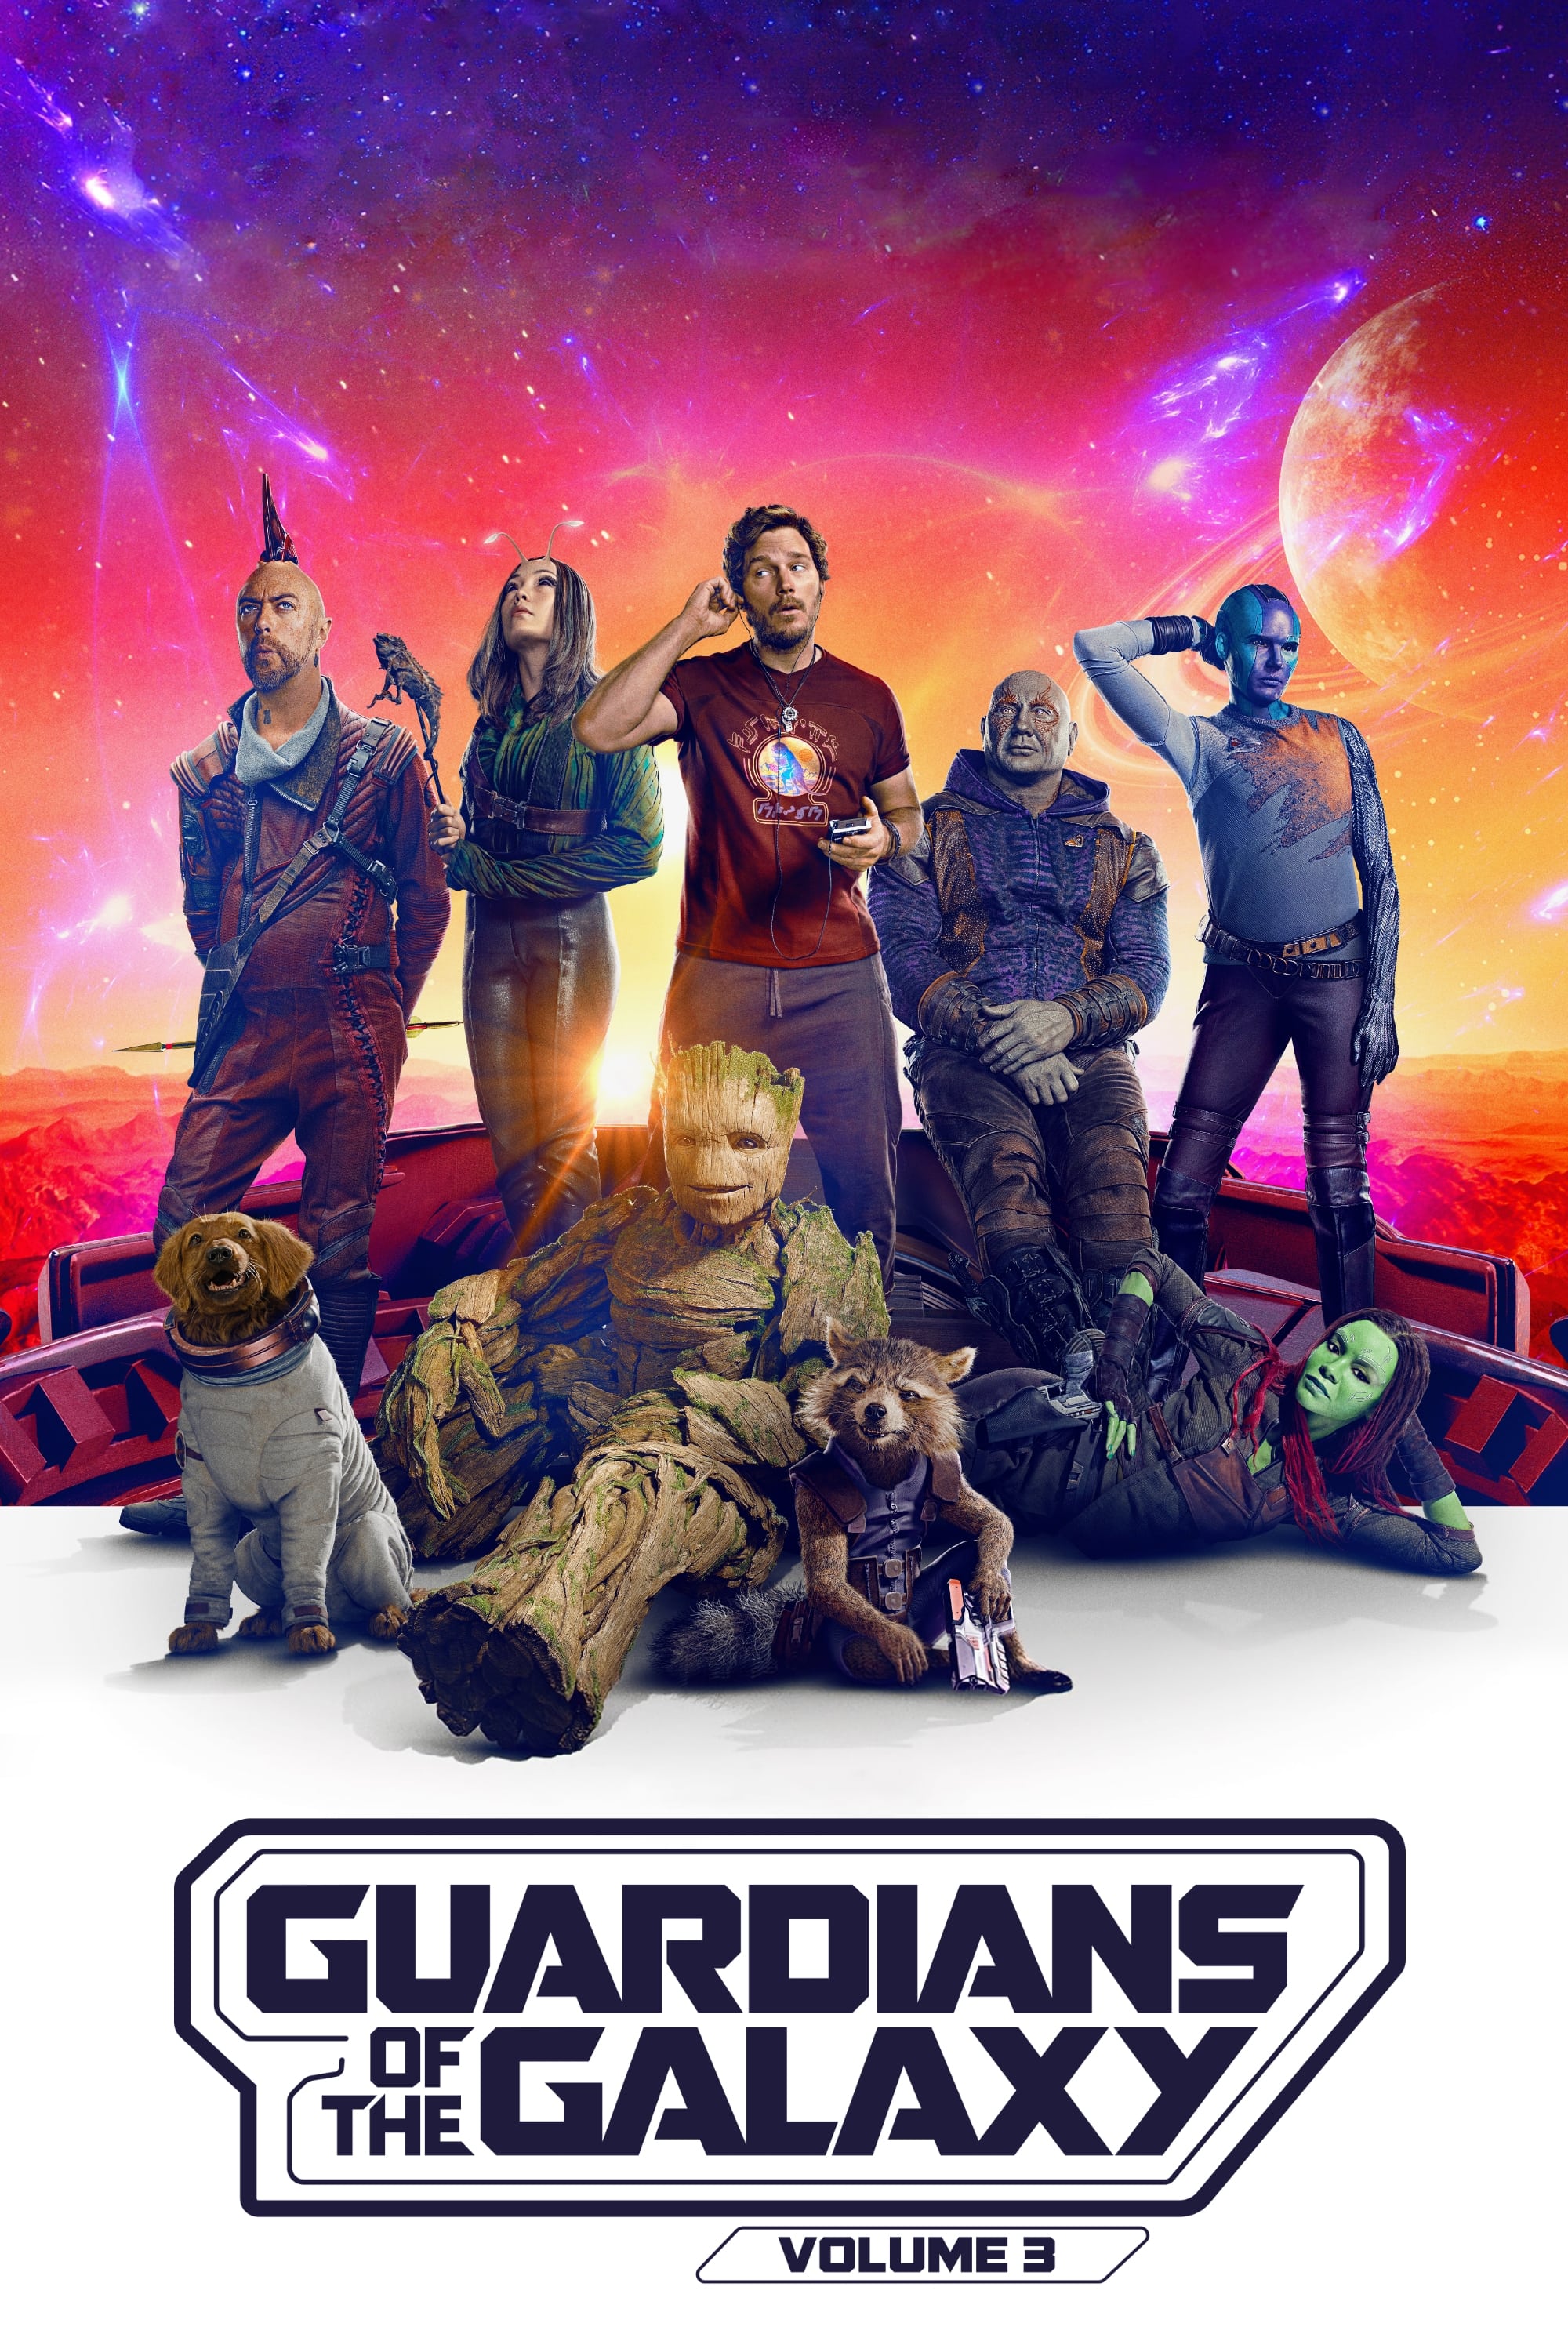 Guardians of the Galaxy Vol. 3 Soundtrack